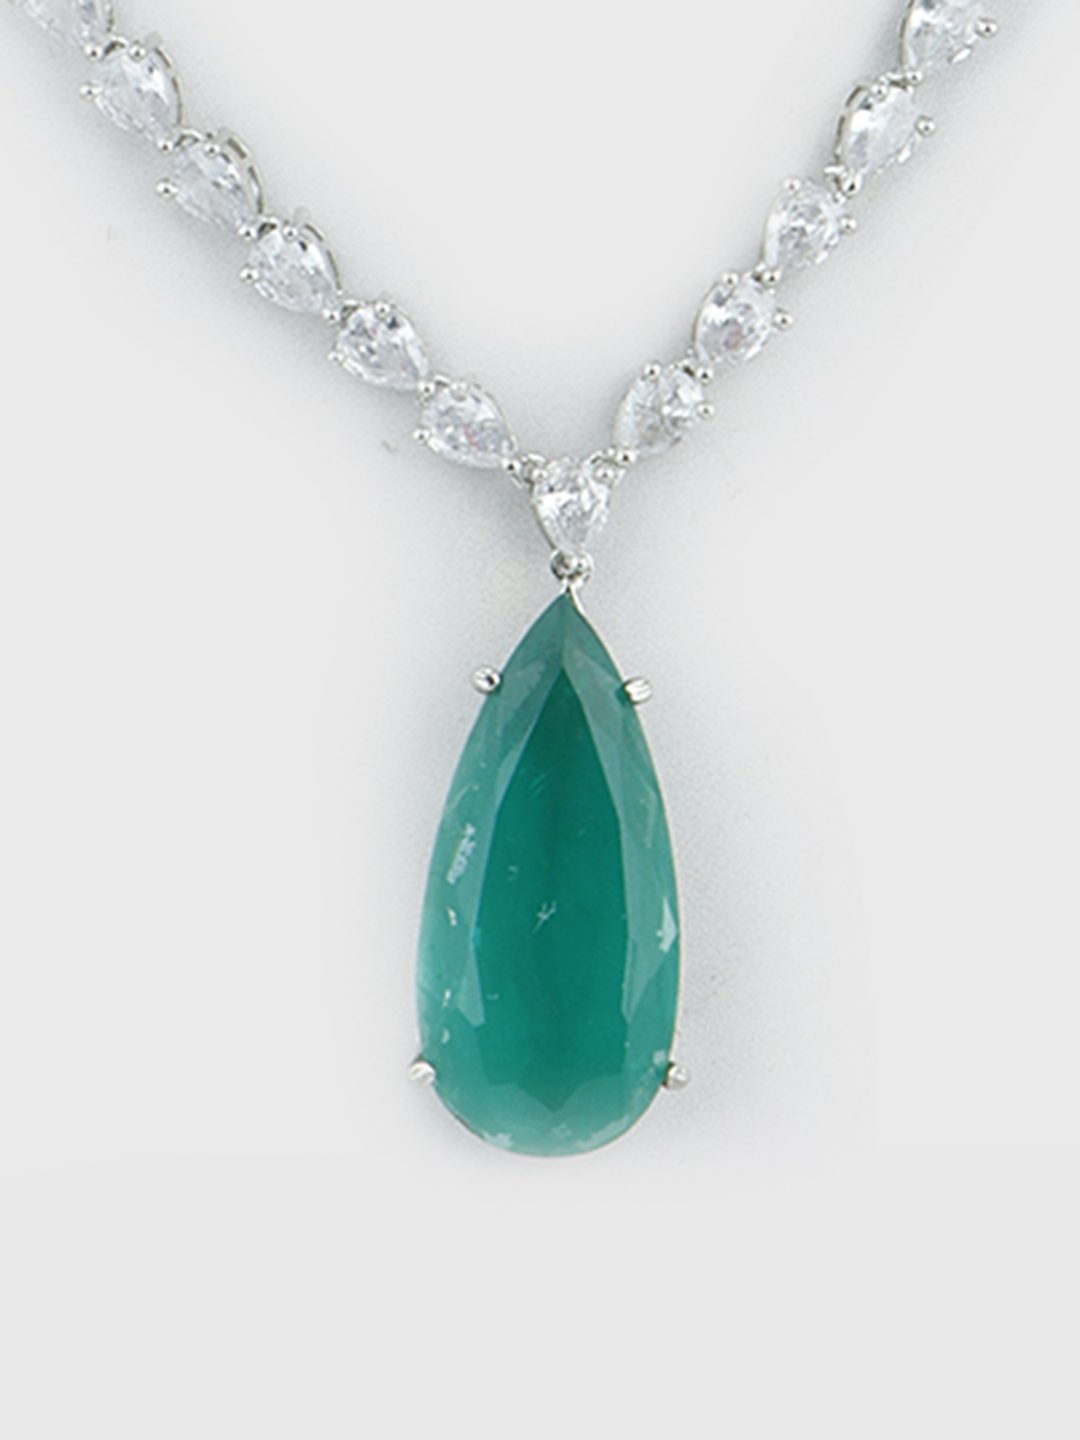 Prestigious Rhodium Plated American Diamond Necklace Set